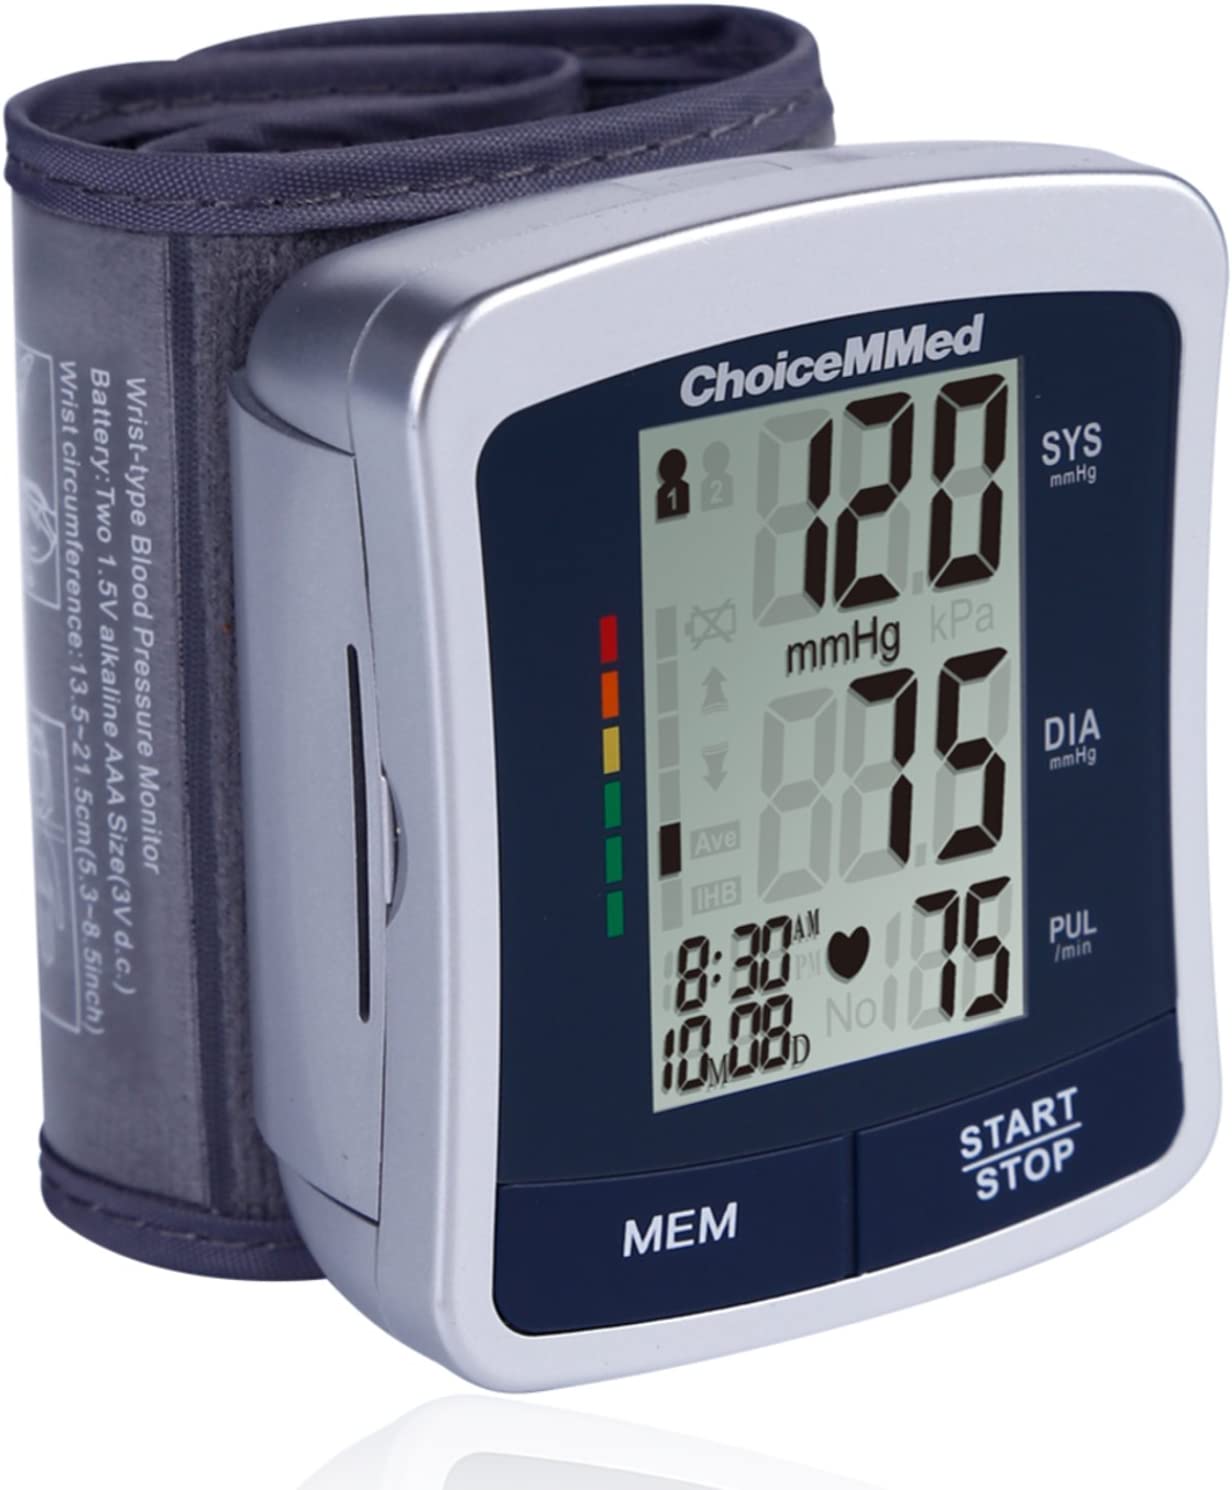 CHOICEMMED Wrist Blood Pressure Monitor - BP Cuff Meter with Display - Blood Pressure Machine up 5.3"-8.5" Wrists - Blood Pressure Tester Kit with Case - Blood Pressure Gauge with Memory